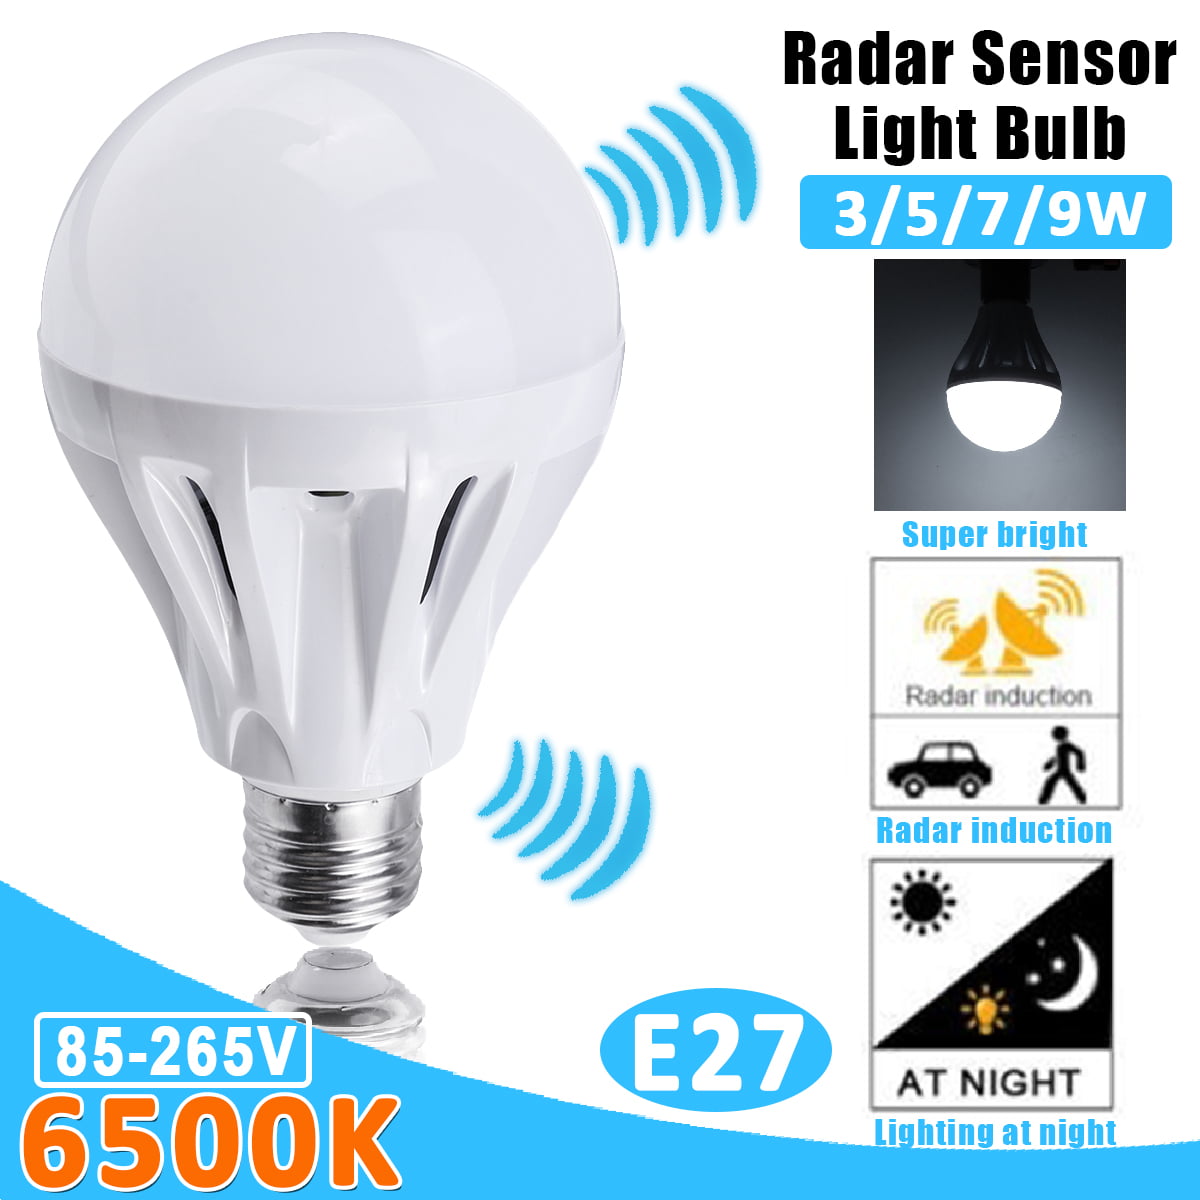 Sensor Light Dusk till Dawn LED Bulb, Light Sensor Porch Light Bulbs, 3